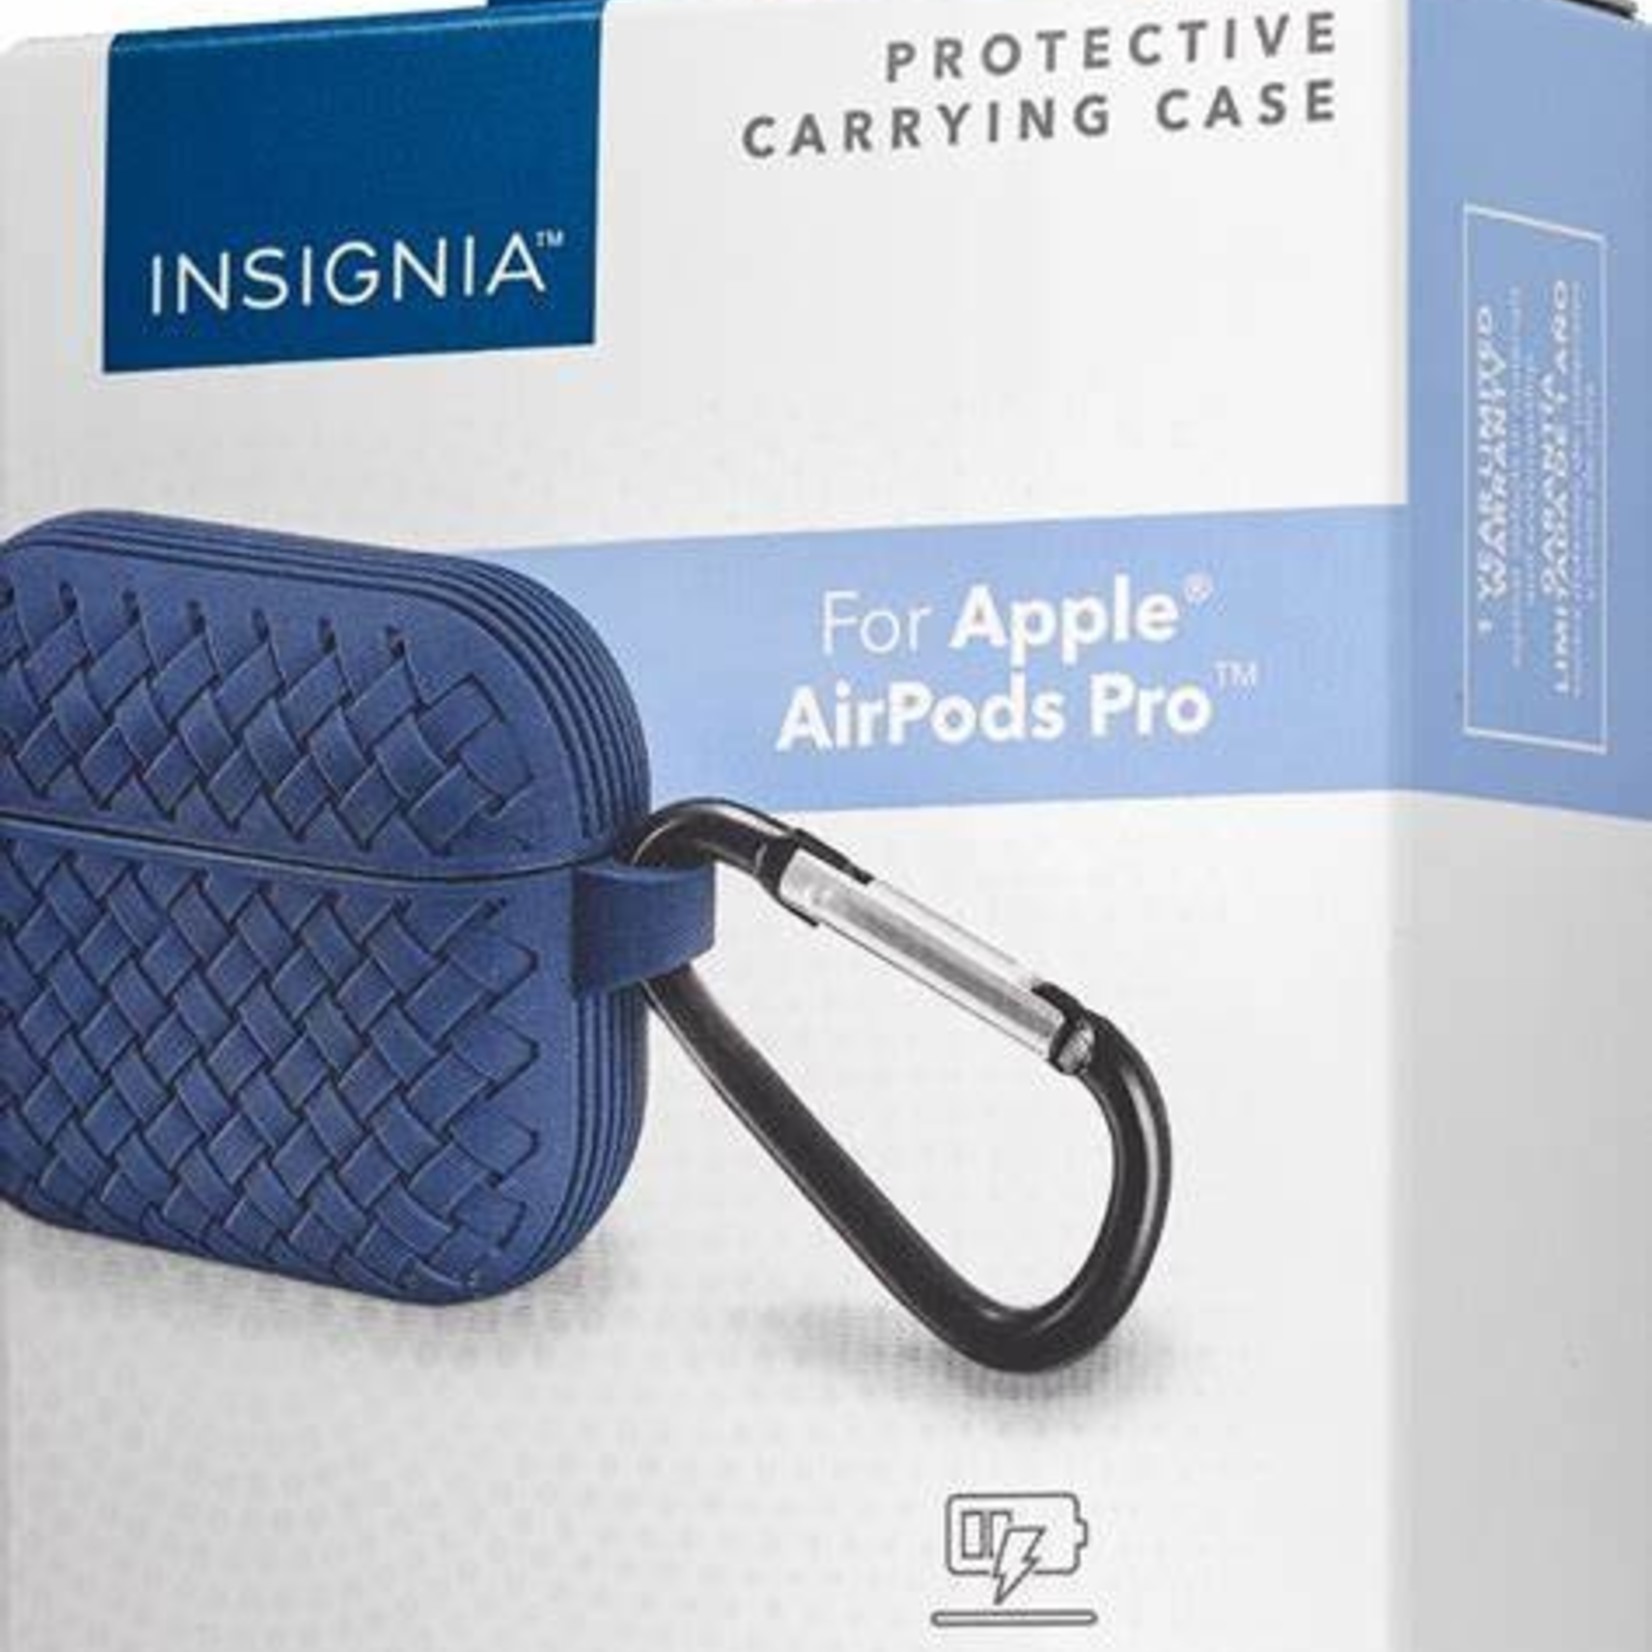 Apple AirPods Pro Case Blue